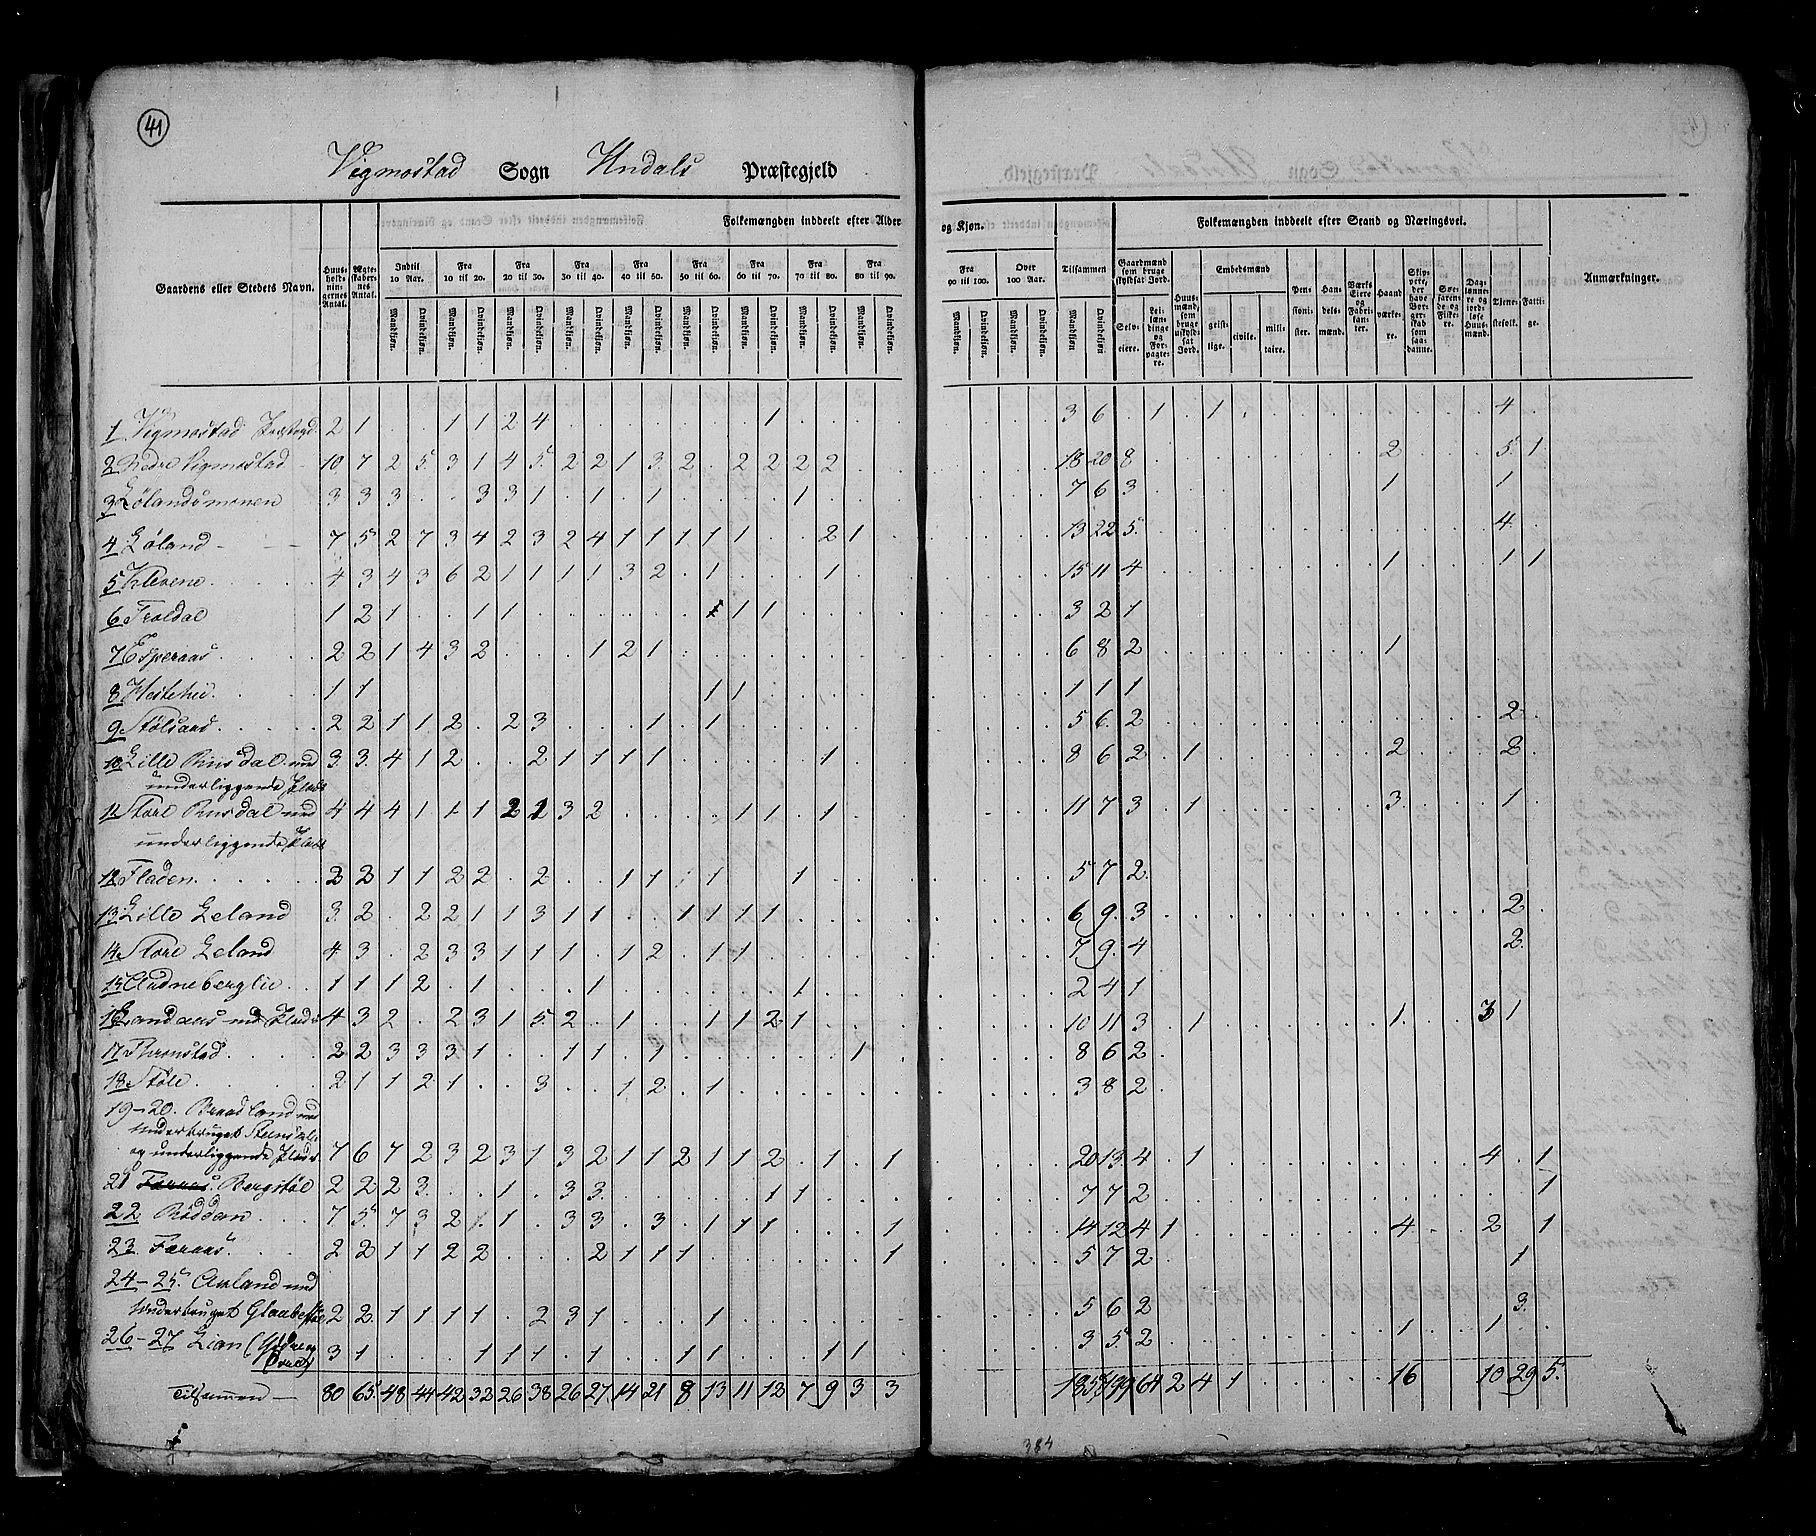 RA, Census 1825, vol. 11: Lister og Mandal amt, 1825, p. 41